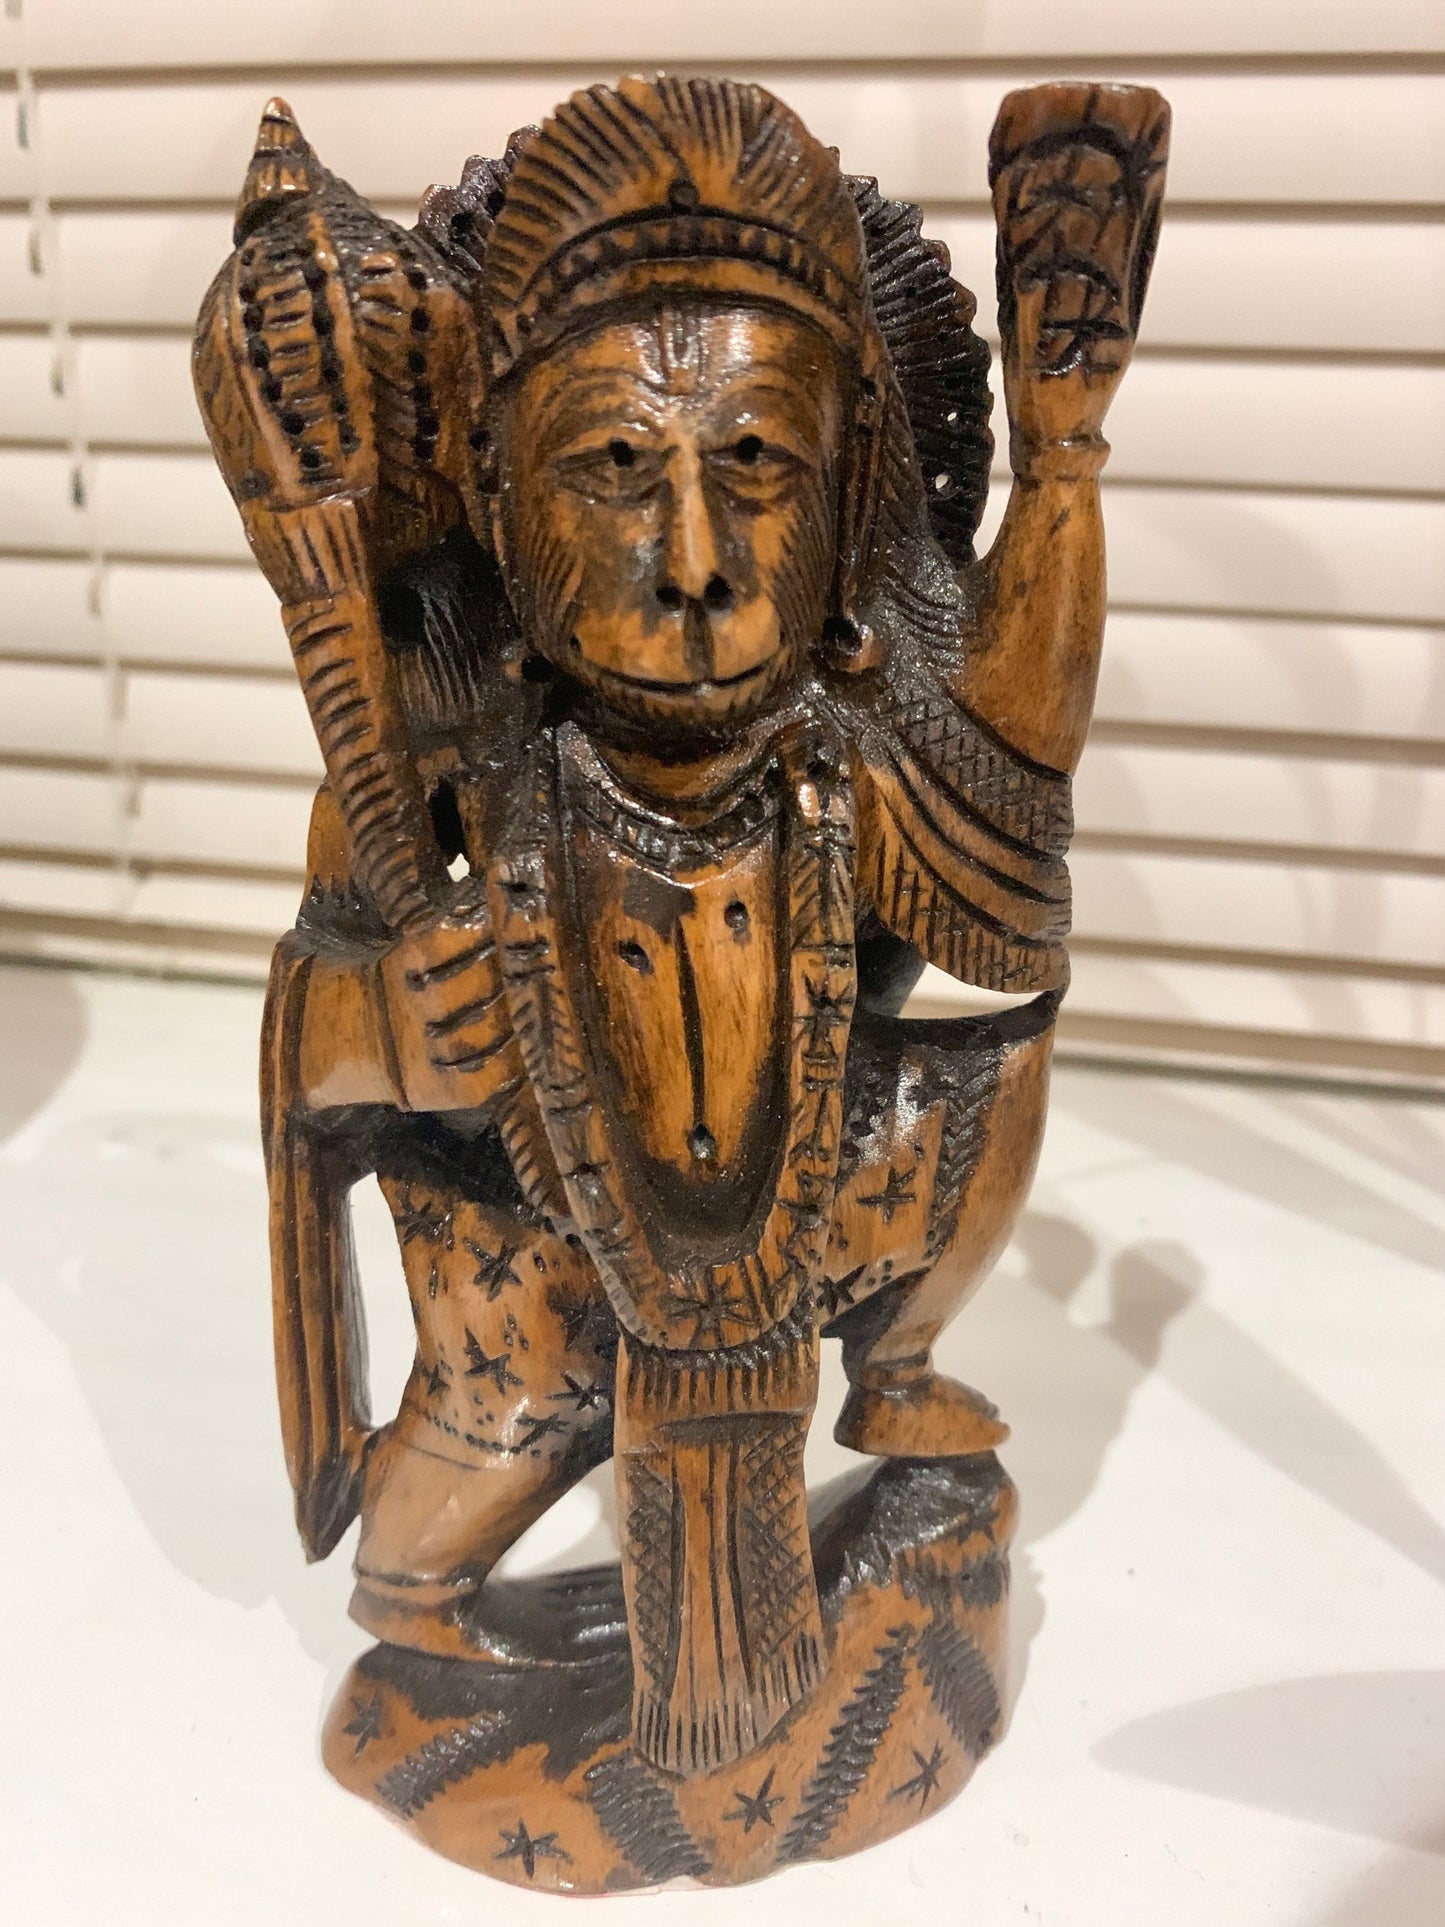 Hanuman Statue 6” wooden Hand Carved statue, Lord Hanumana idol, Hindu deity God, Monkey god Hanuman figure religious prayer home decor gift